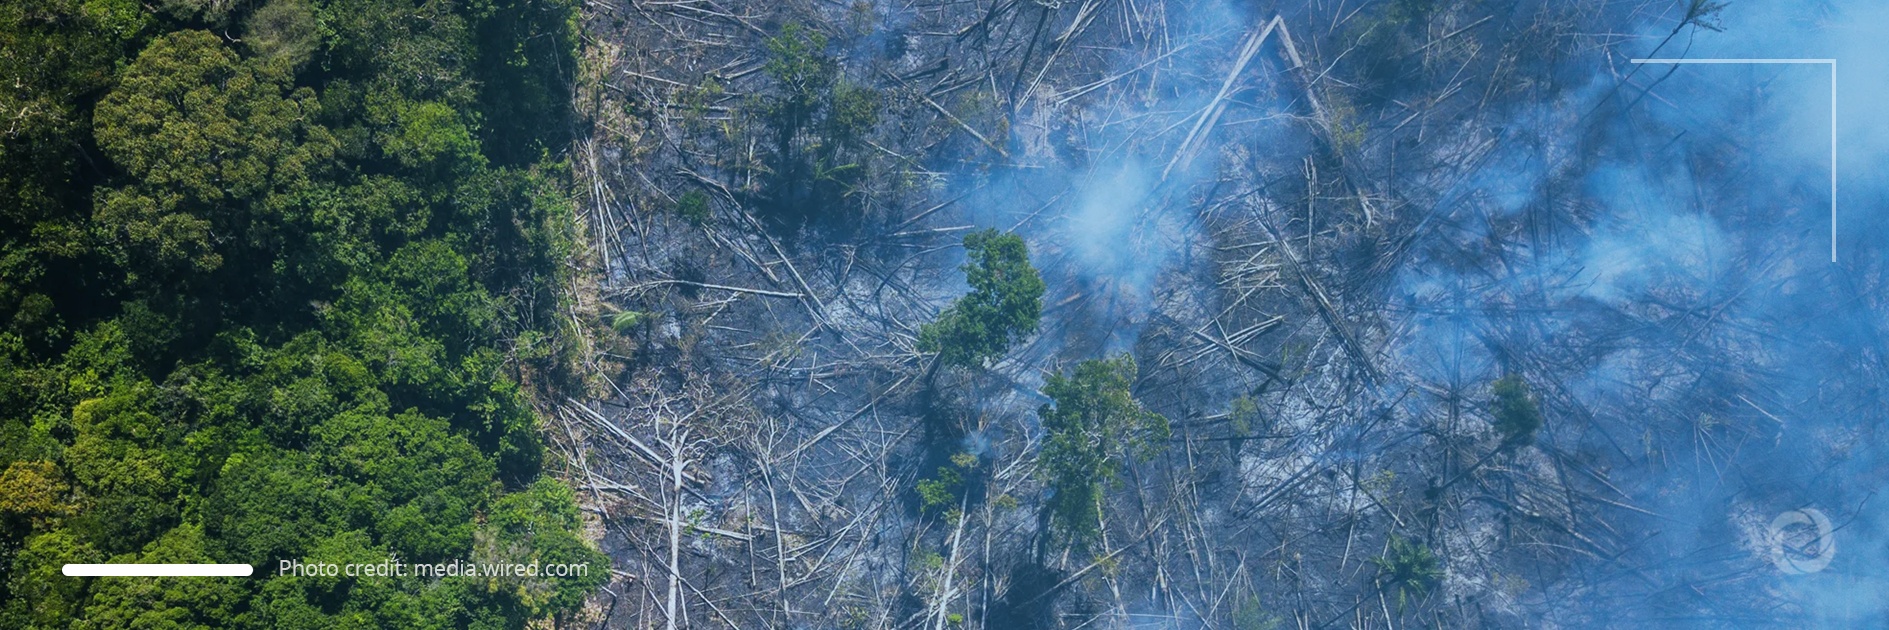 Deforestation of Brazilian Amazon rainforest hits record high